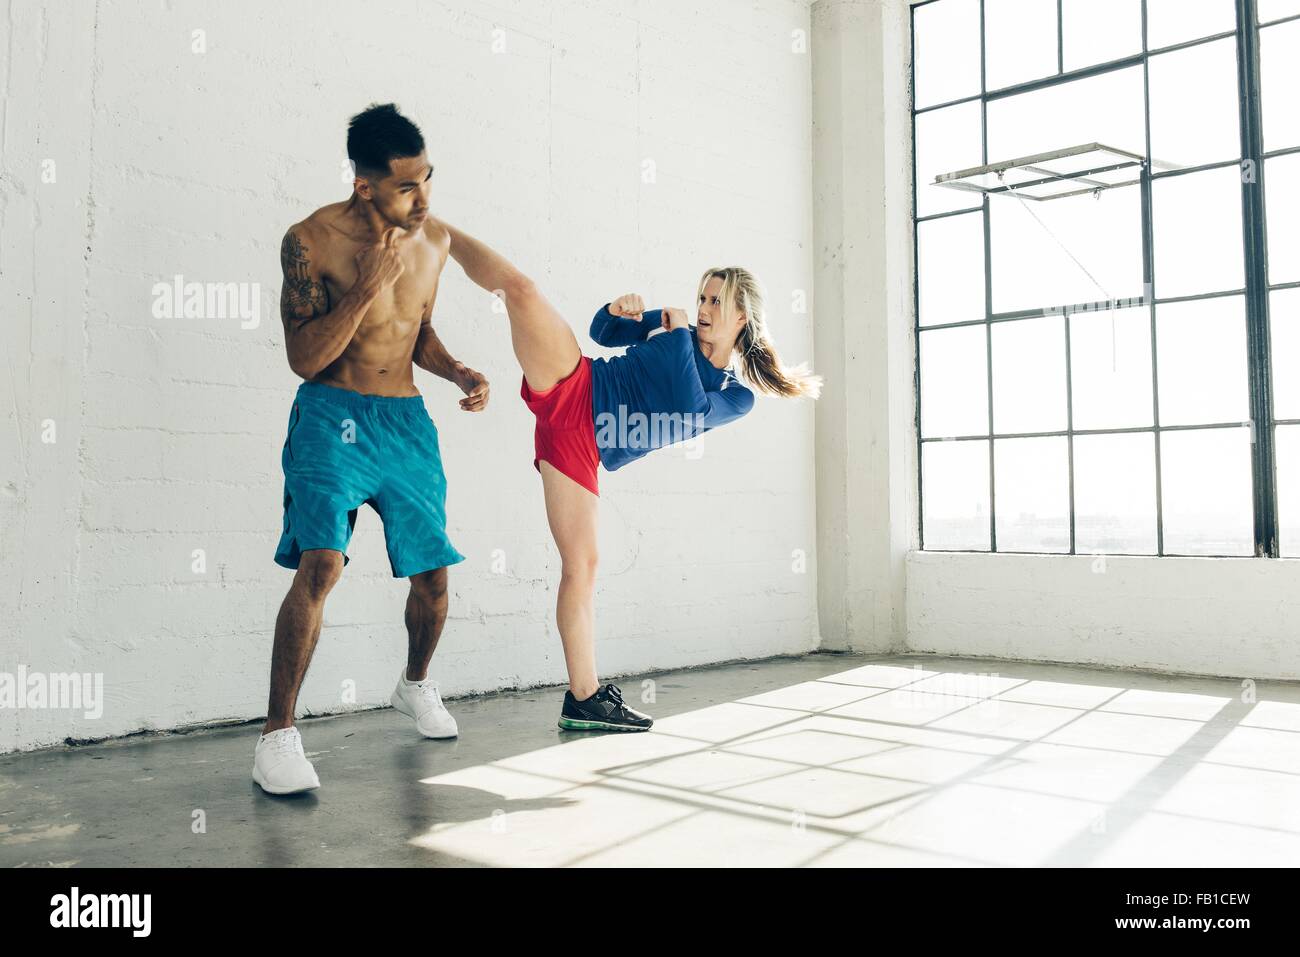 Couple in gym, leg raised, kickboxing Stock Photo